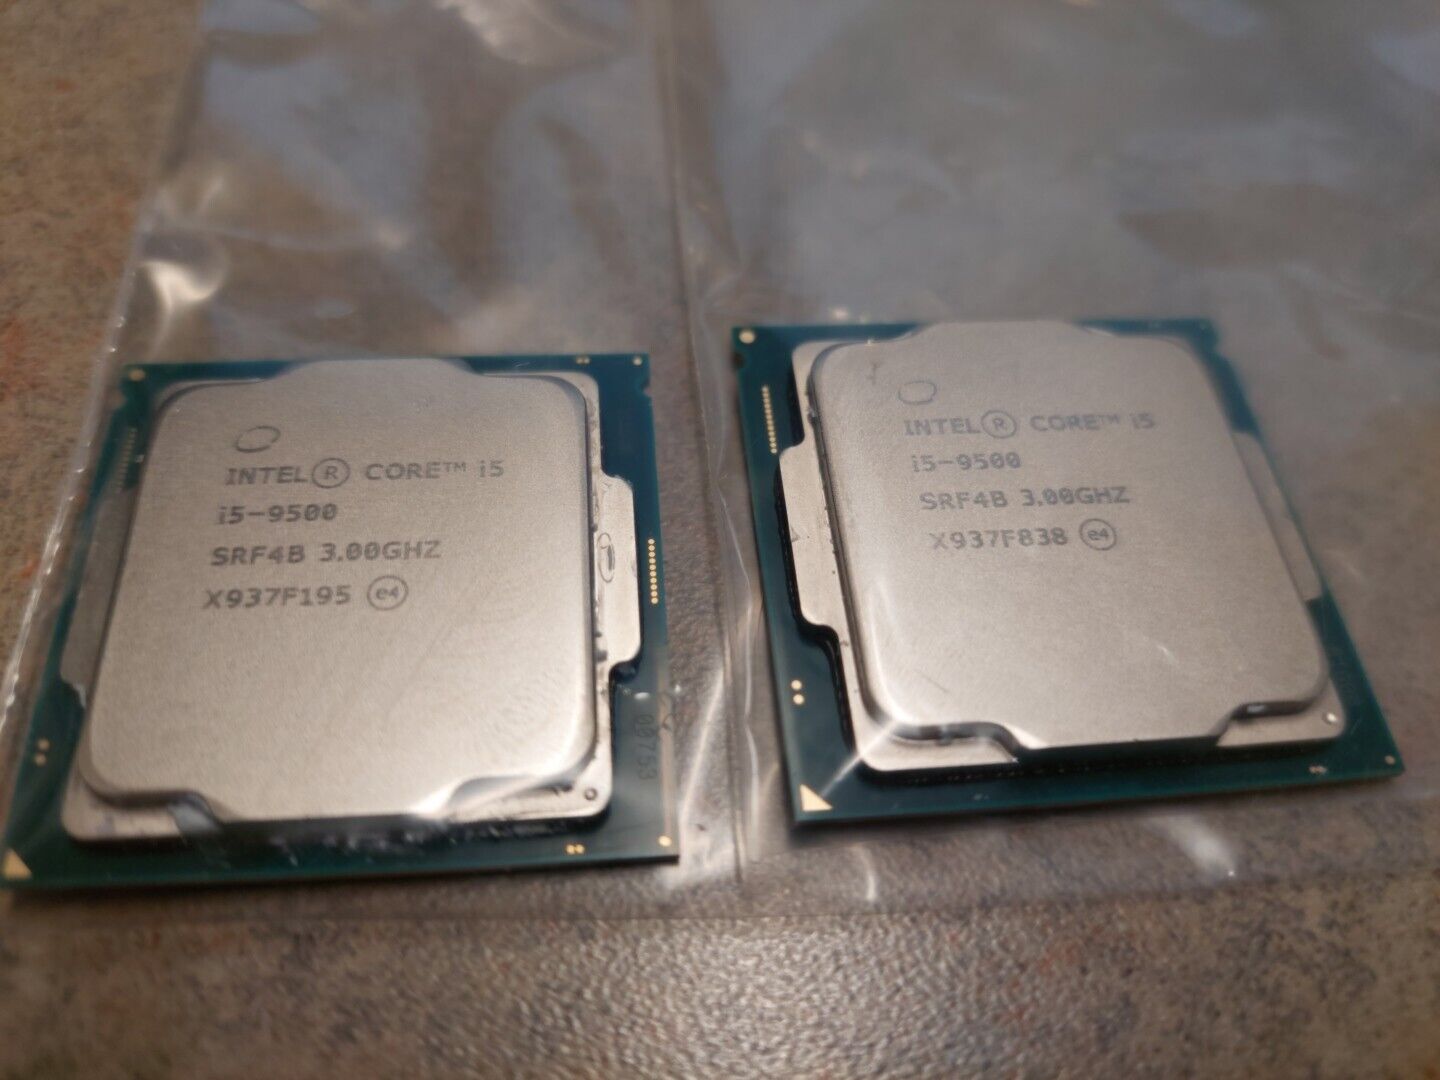 Lot of 2 Intel Core i5-9500 3.0 GHz LGA 1151 CPU